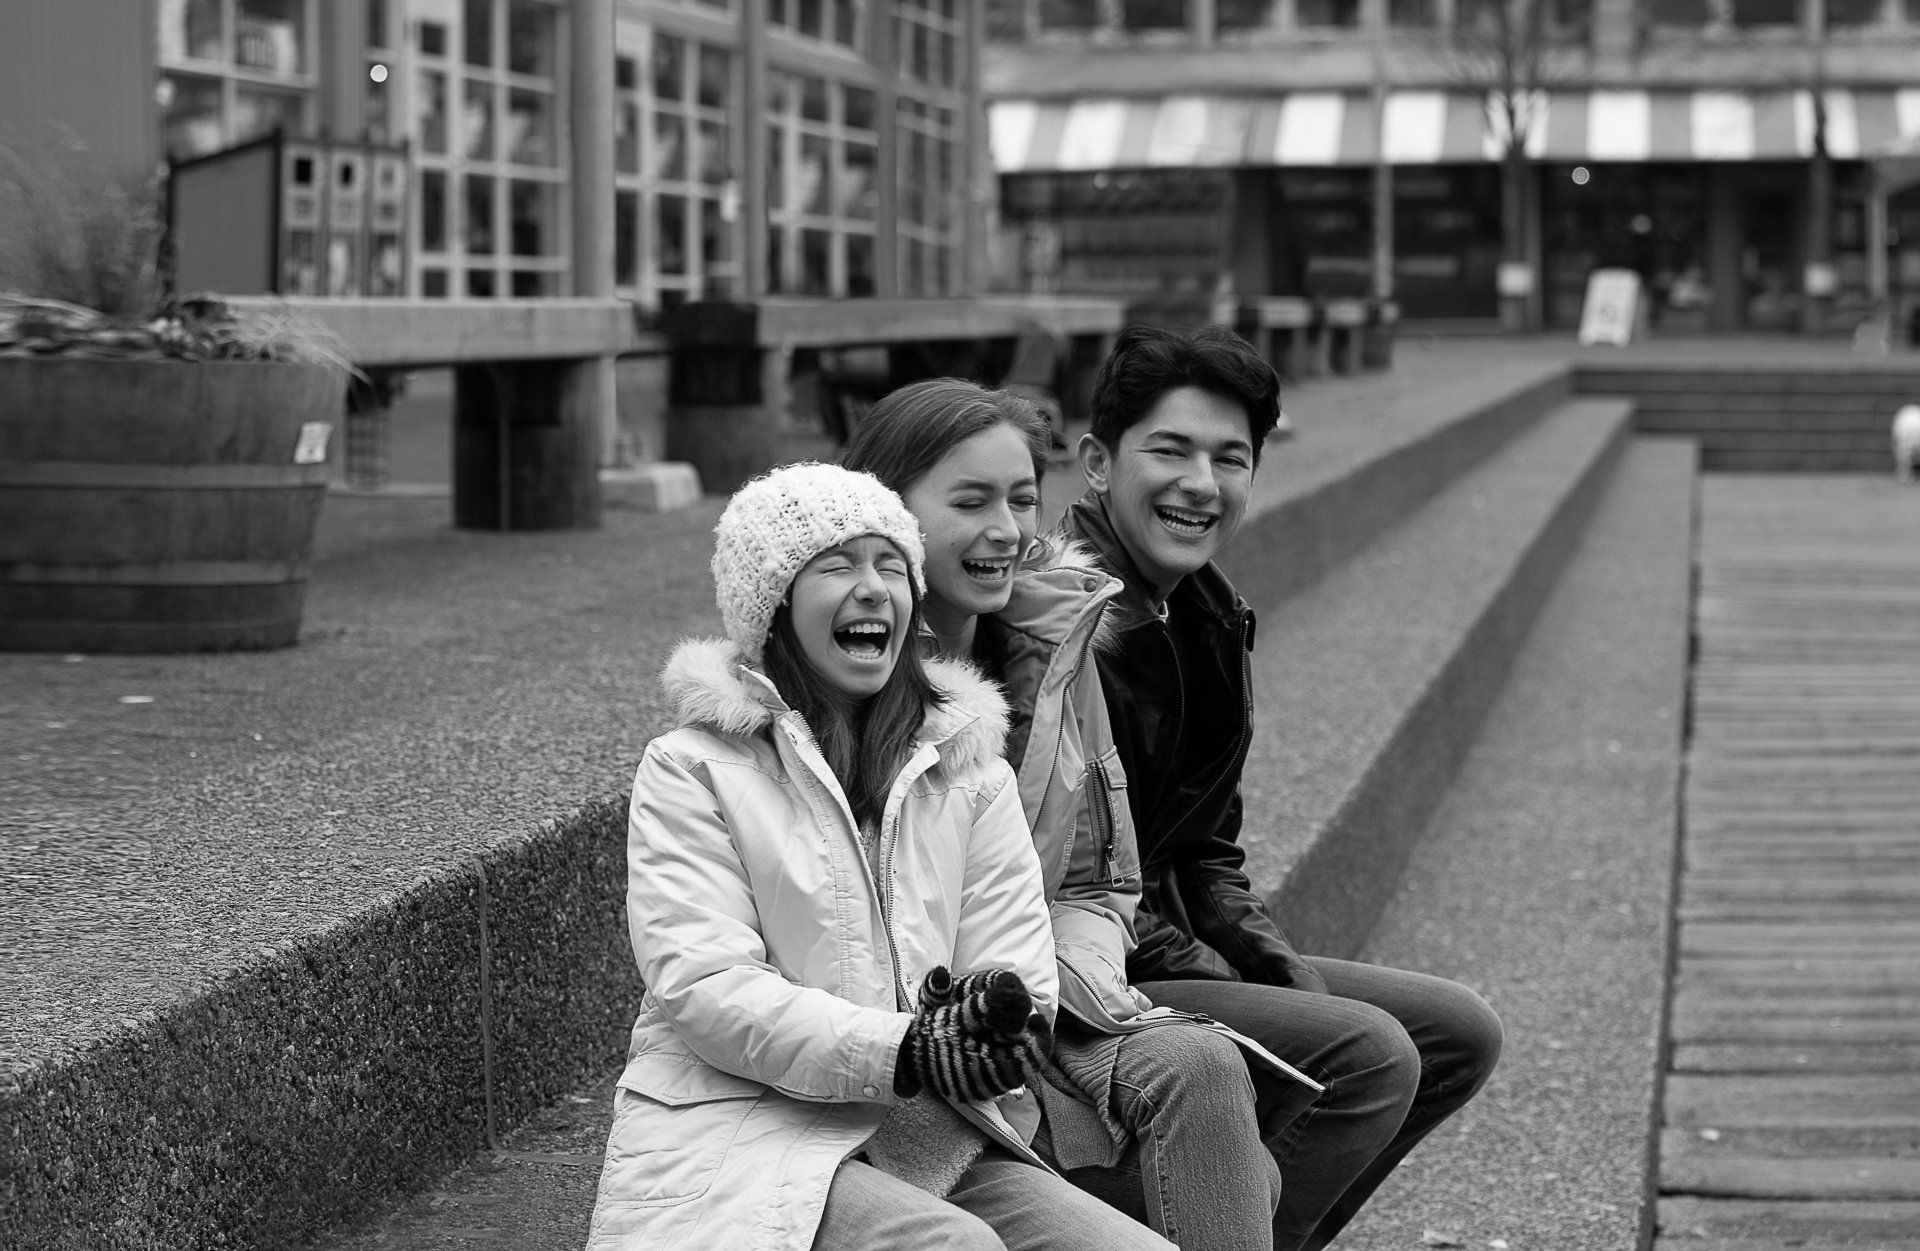 Natalie-DAngelo-Photography-Vancouver-BC-Canada-BlackWhite-Family-Portraits-Visual-Storyteller-three-siblings-smiling-teenagers